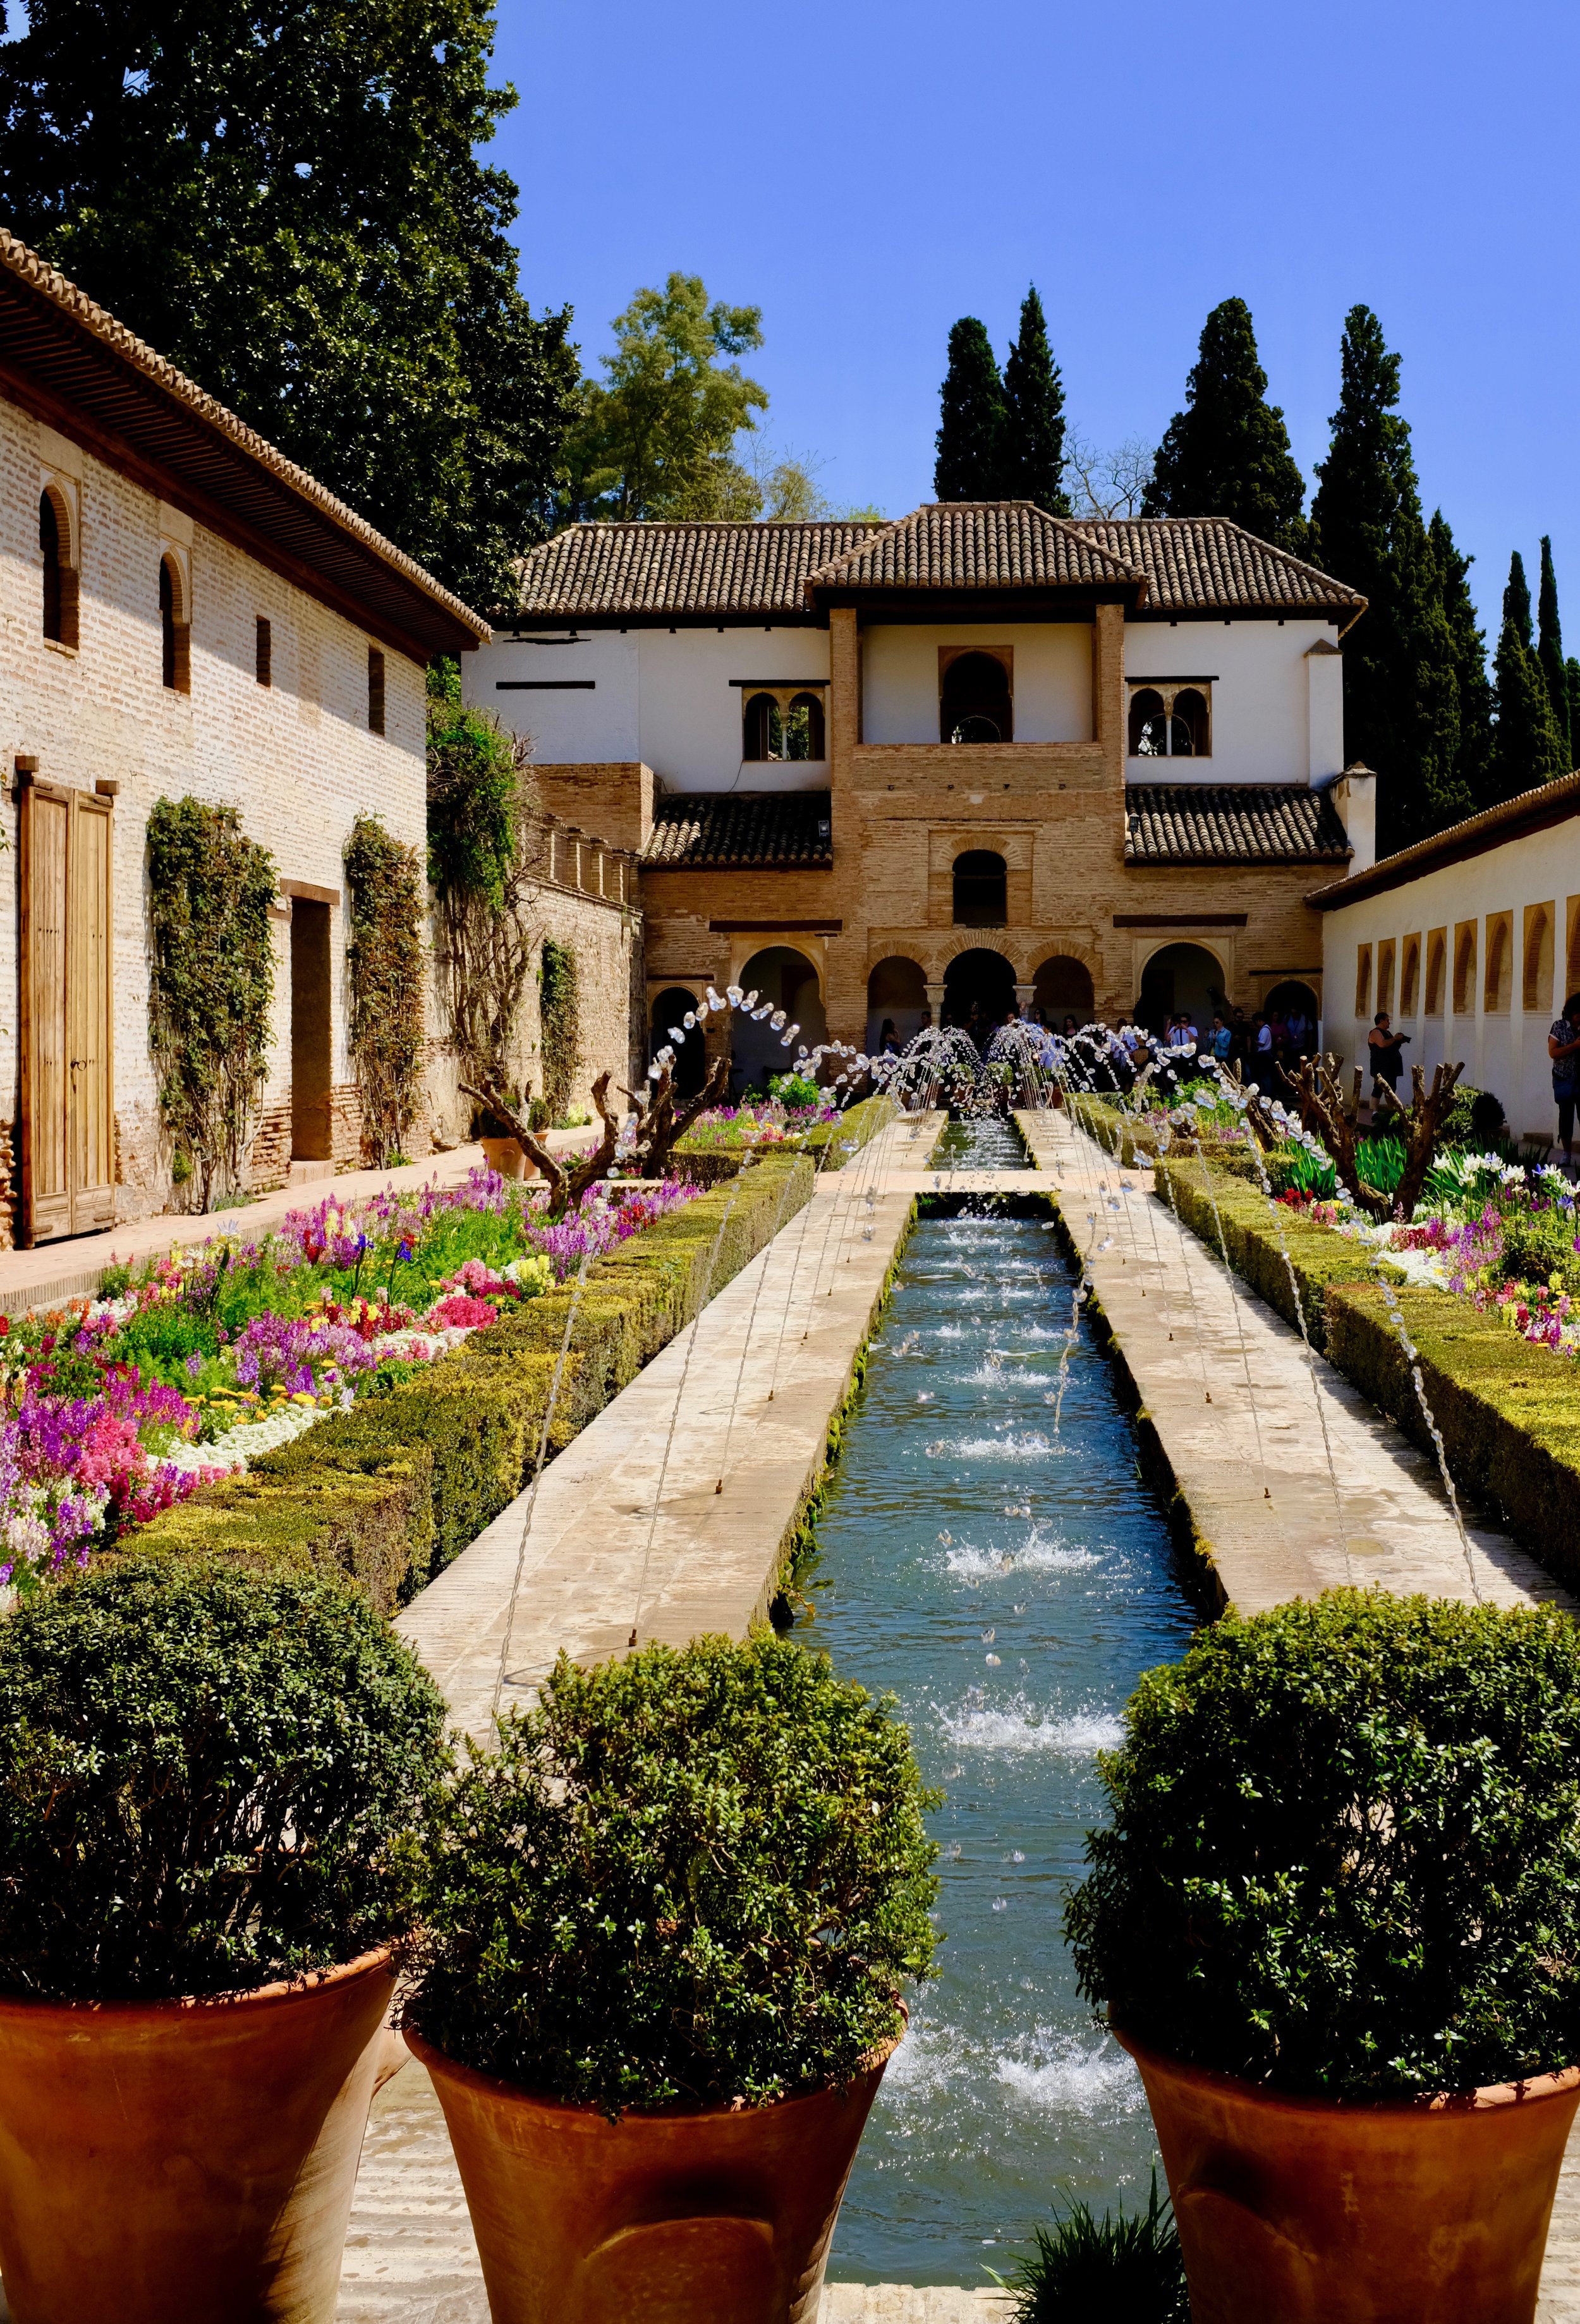 Visiting The Alhambra In Granada Spain